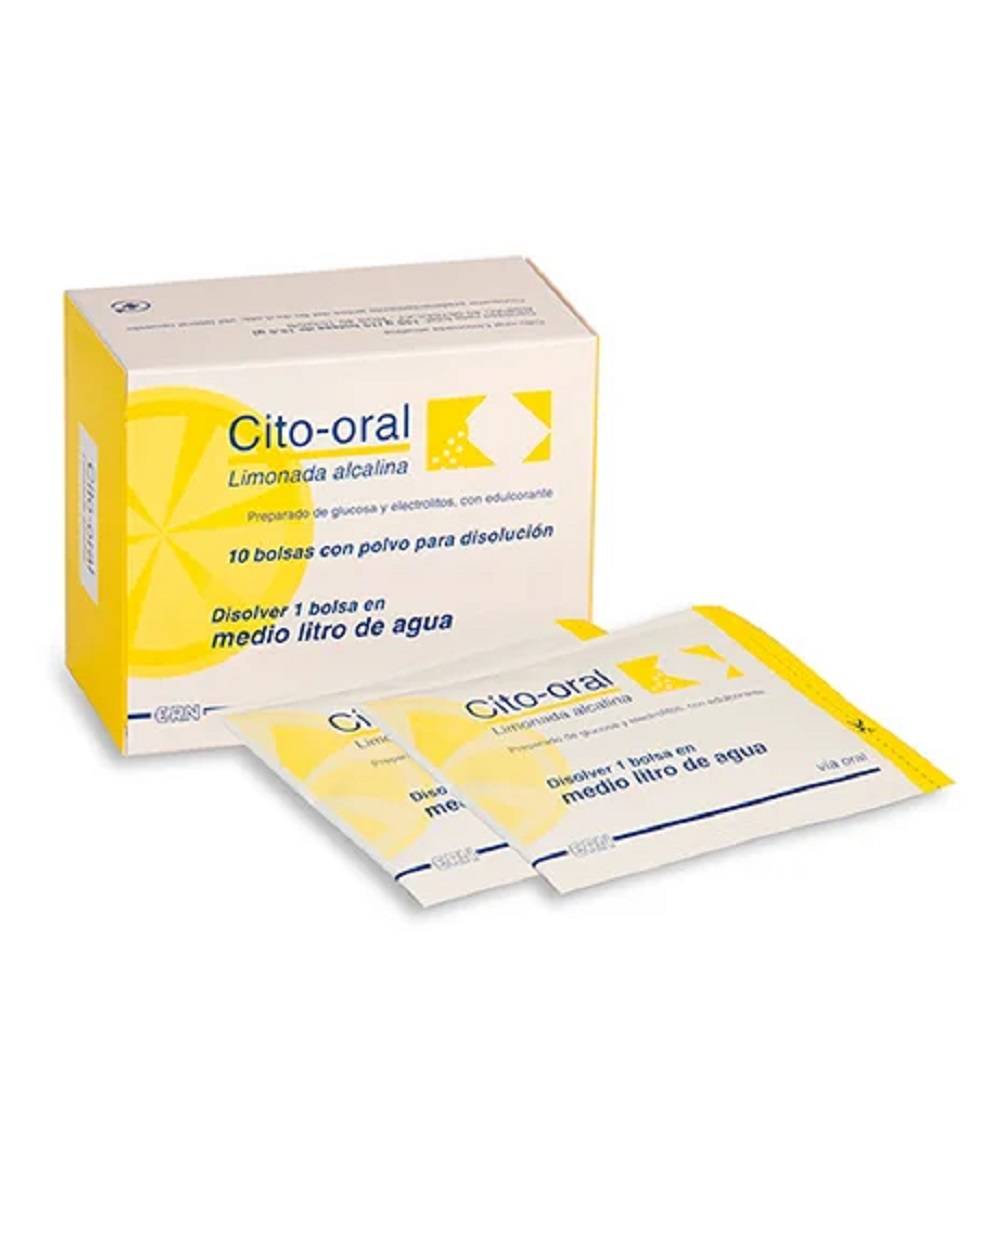 Cito-oral Limonada alcalina 10 bolsas